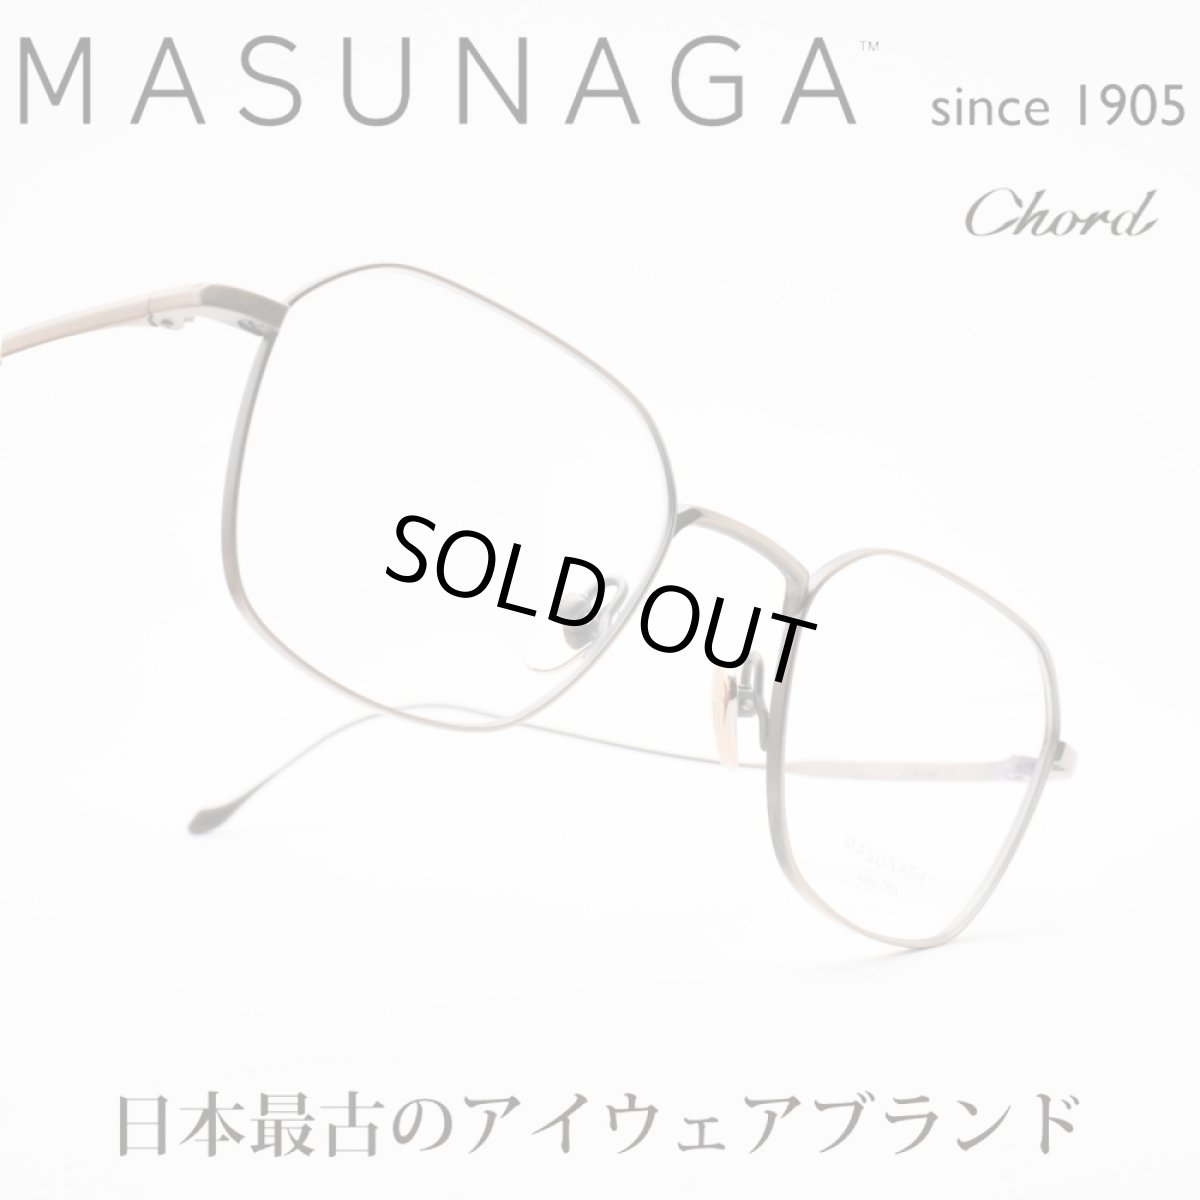 画像1: 増永眼鏡 MASUNAGA since 1905 Chord G col-11 (1)